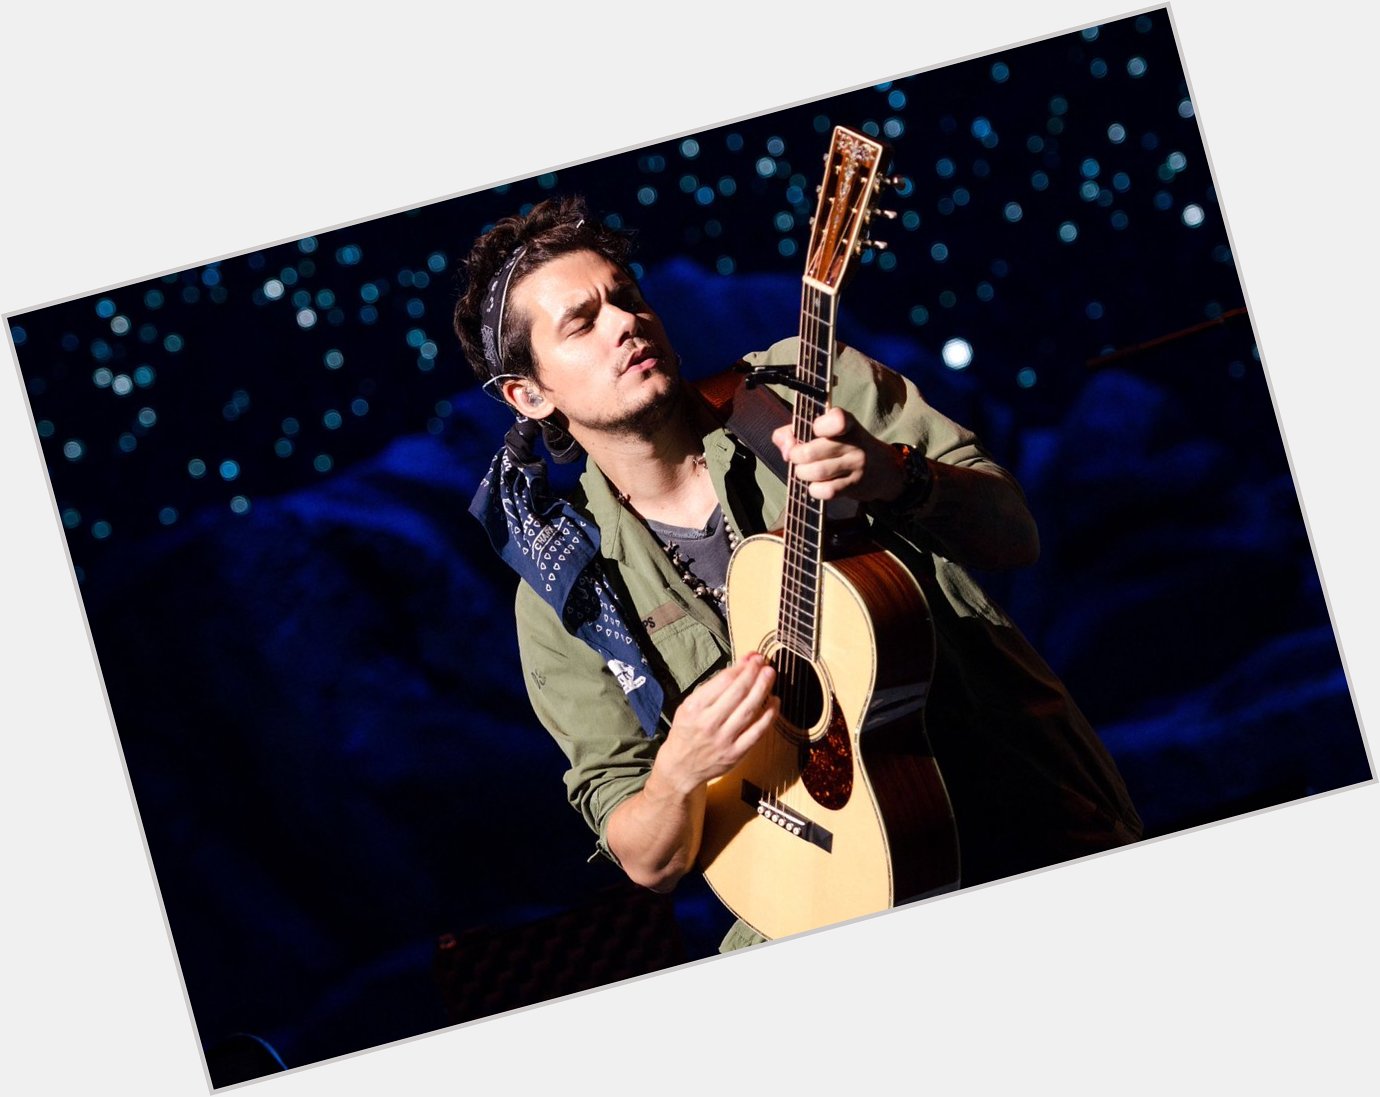 Happy Birthday to John Mayer. The Grammy winning singer-songwriter turns 40 years old today! 